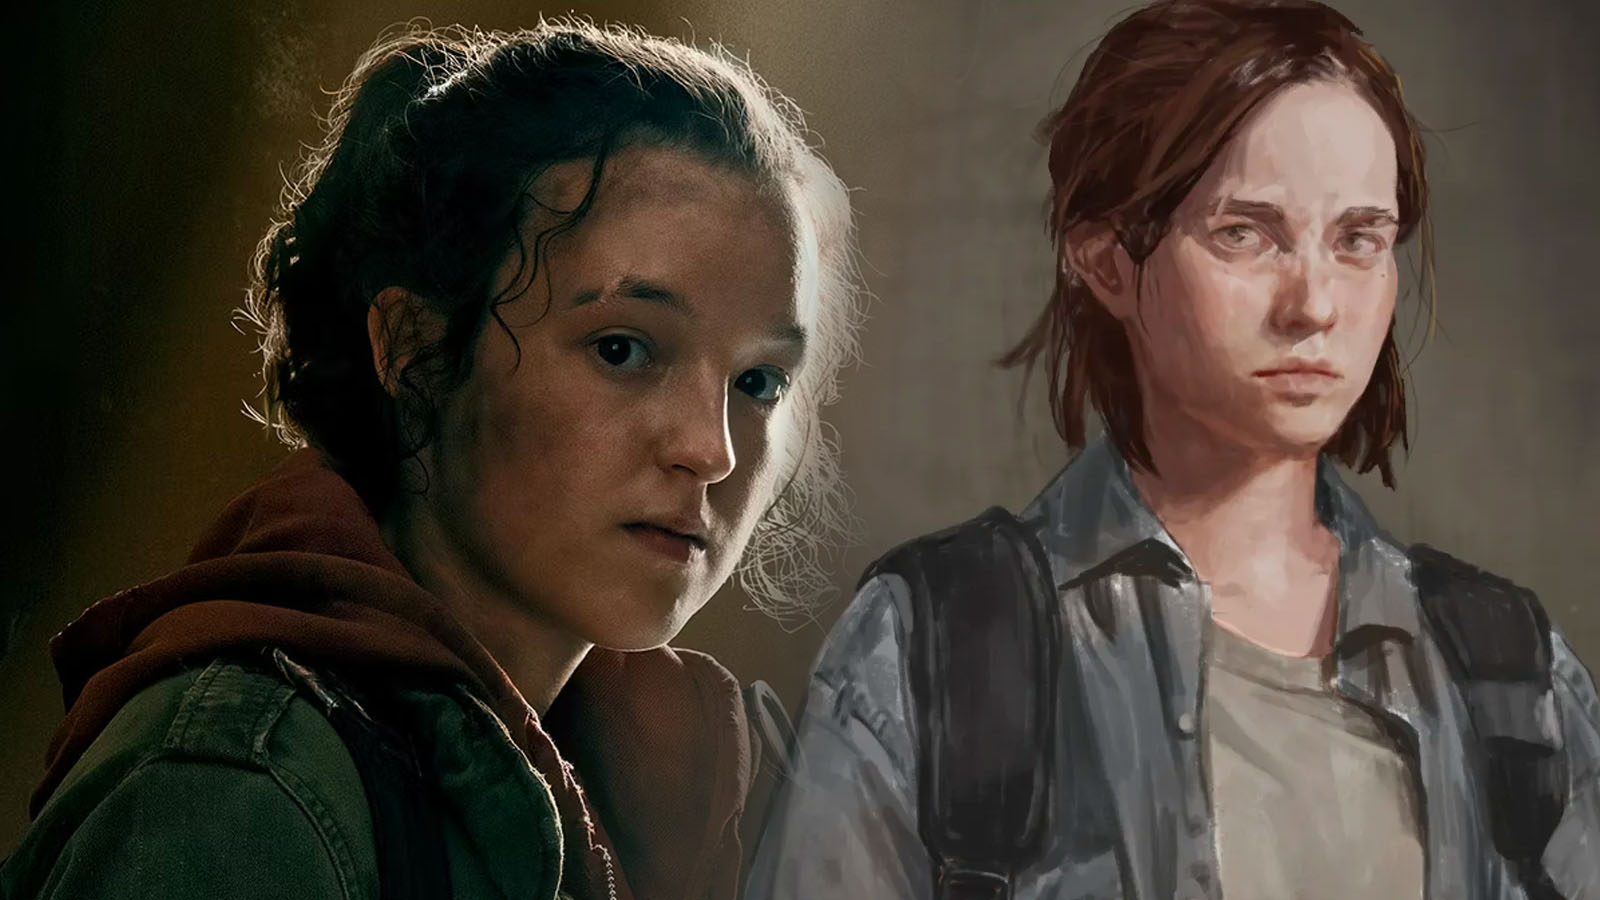 The Last of Us boss confirms Bella Ramsey will return as Ellie in season 2